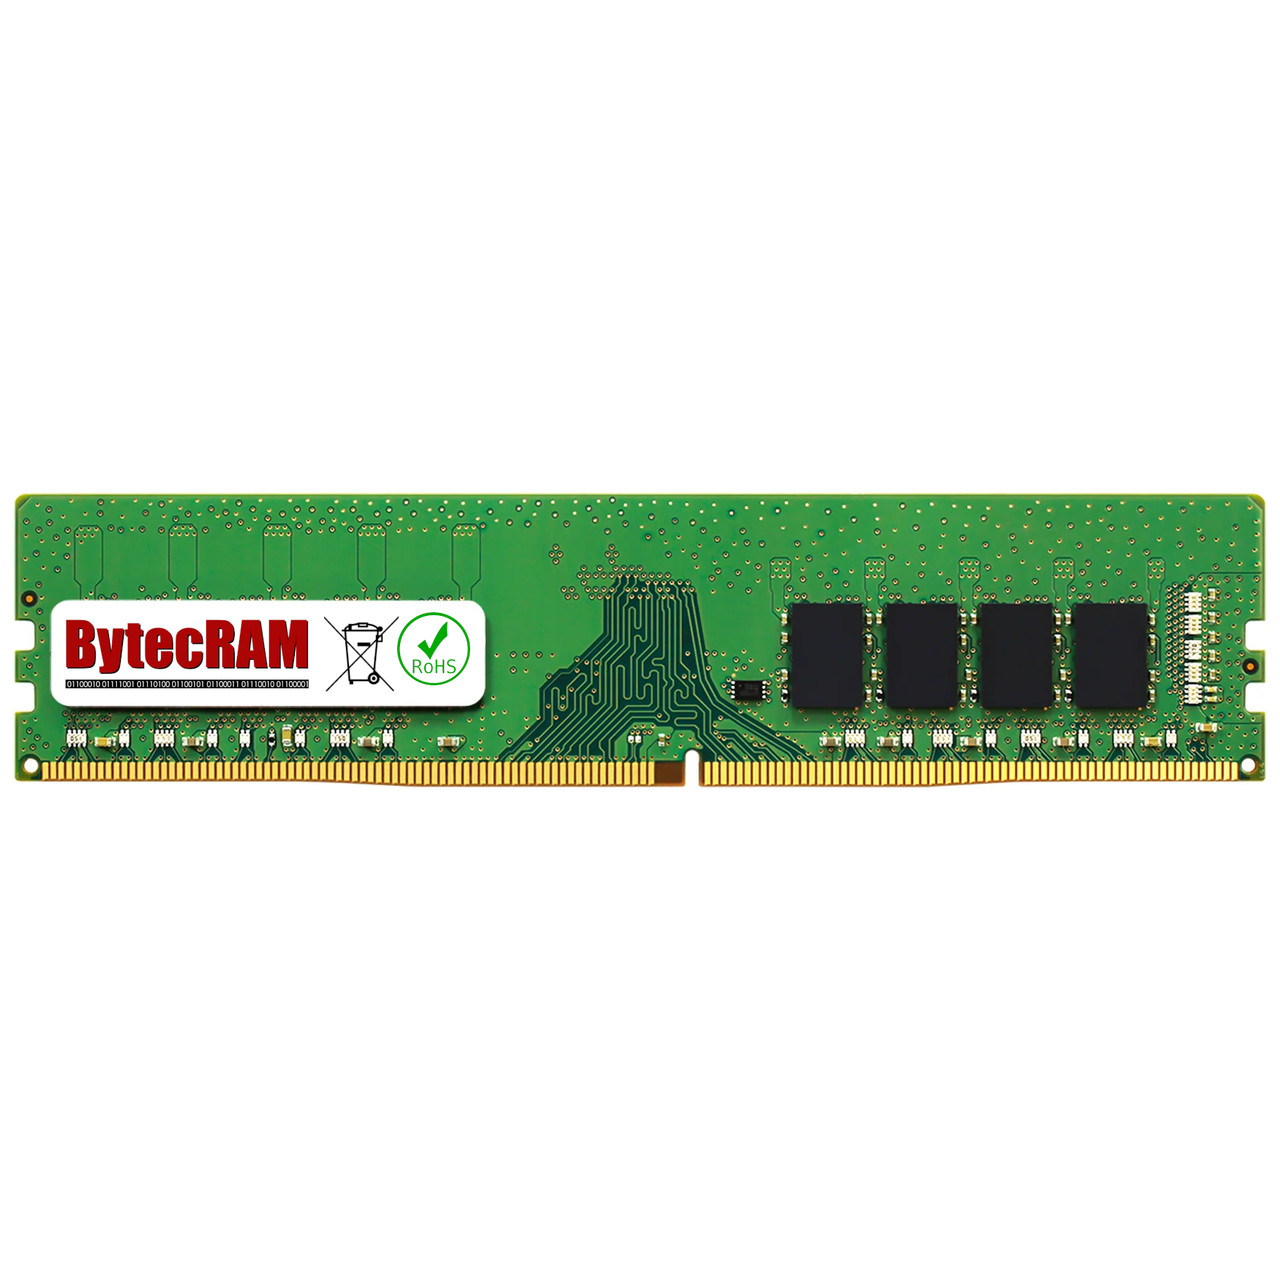 eBay*4GB Dell Vostro 3268 DDR4 2400MHz UDIMM Memory RAM Upgrade